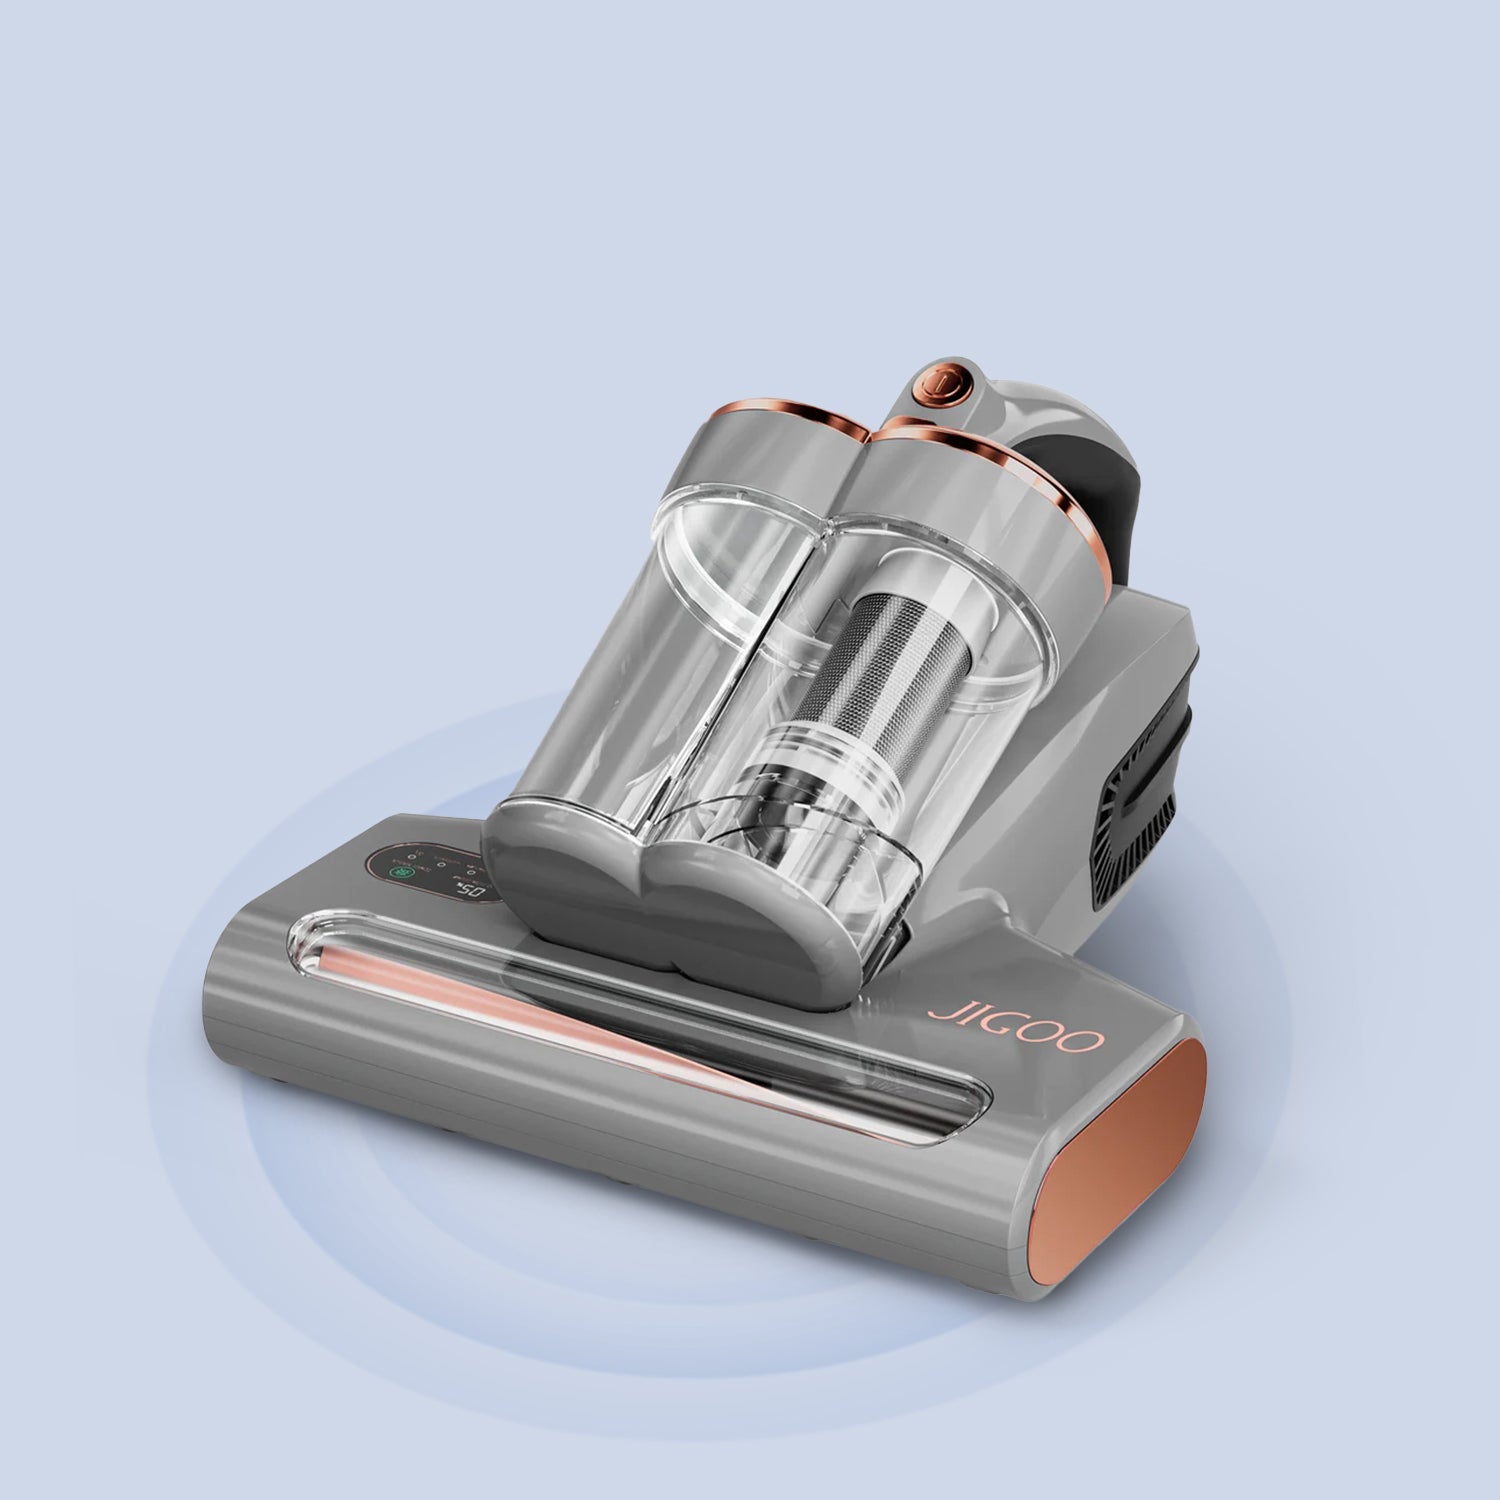 Jigoo C300 Cordless Vacuum Cleaner